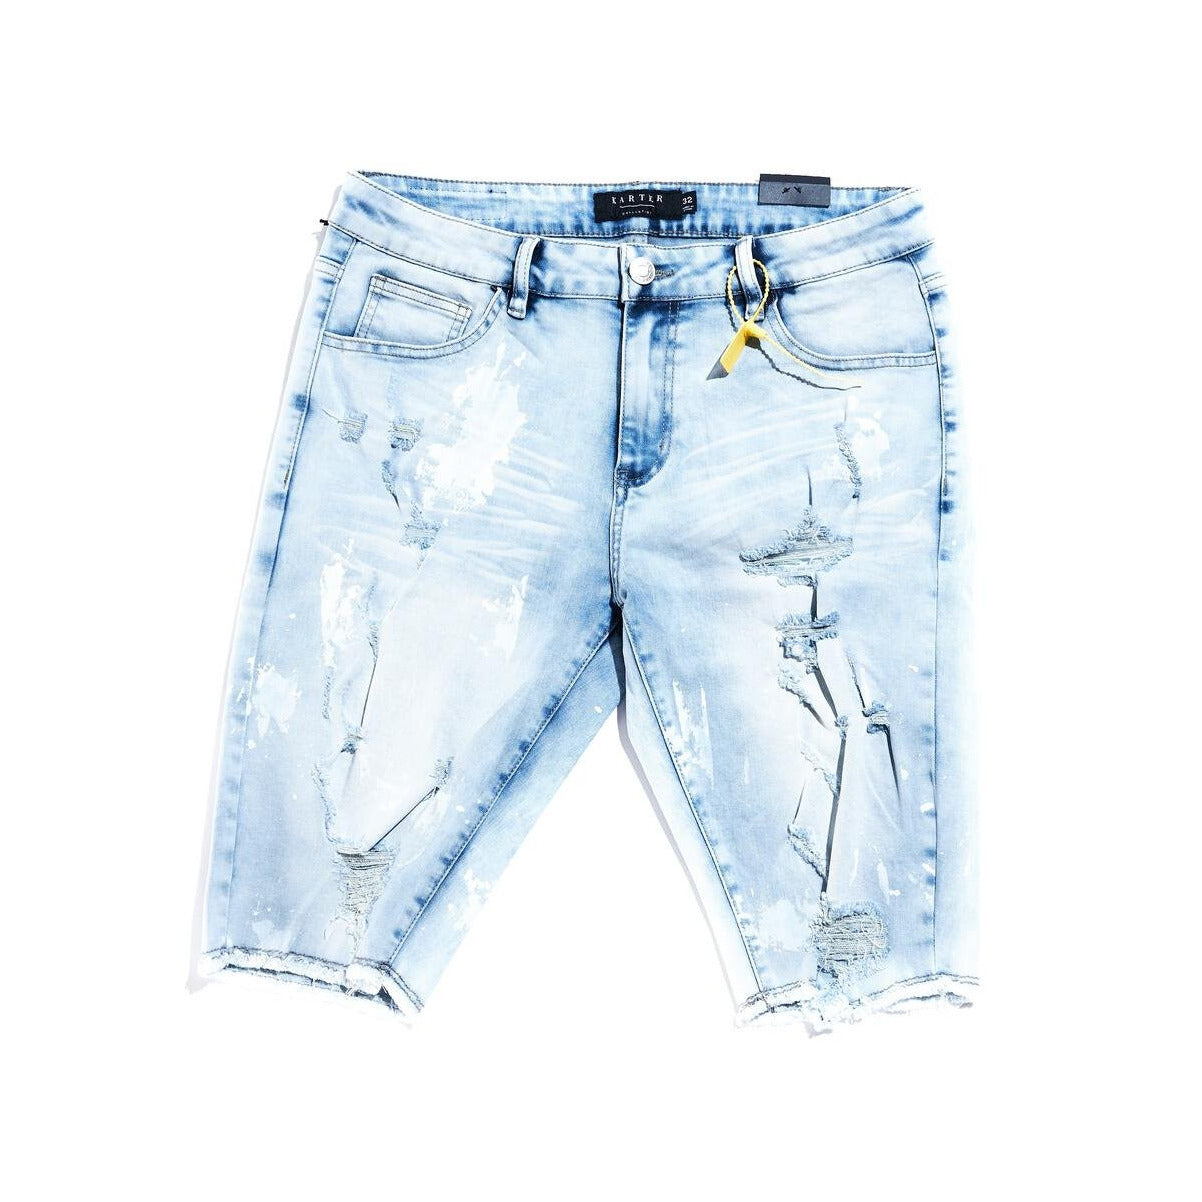 Kater Collection Asher Blue Denim Shorts (KARPK-307)